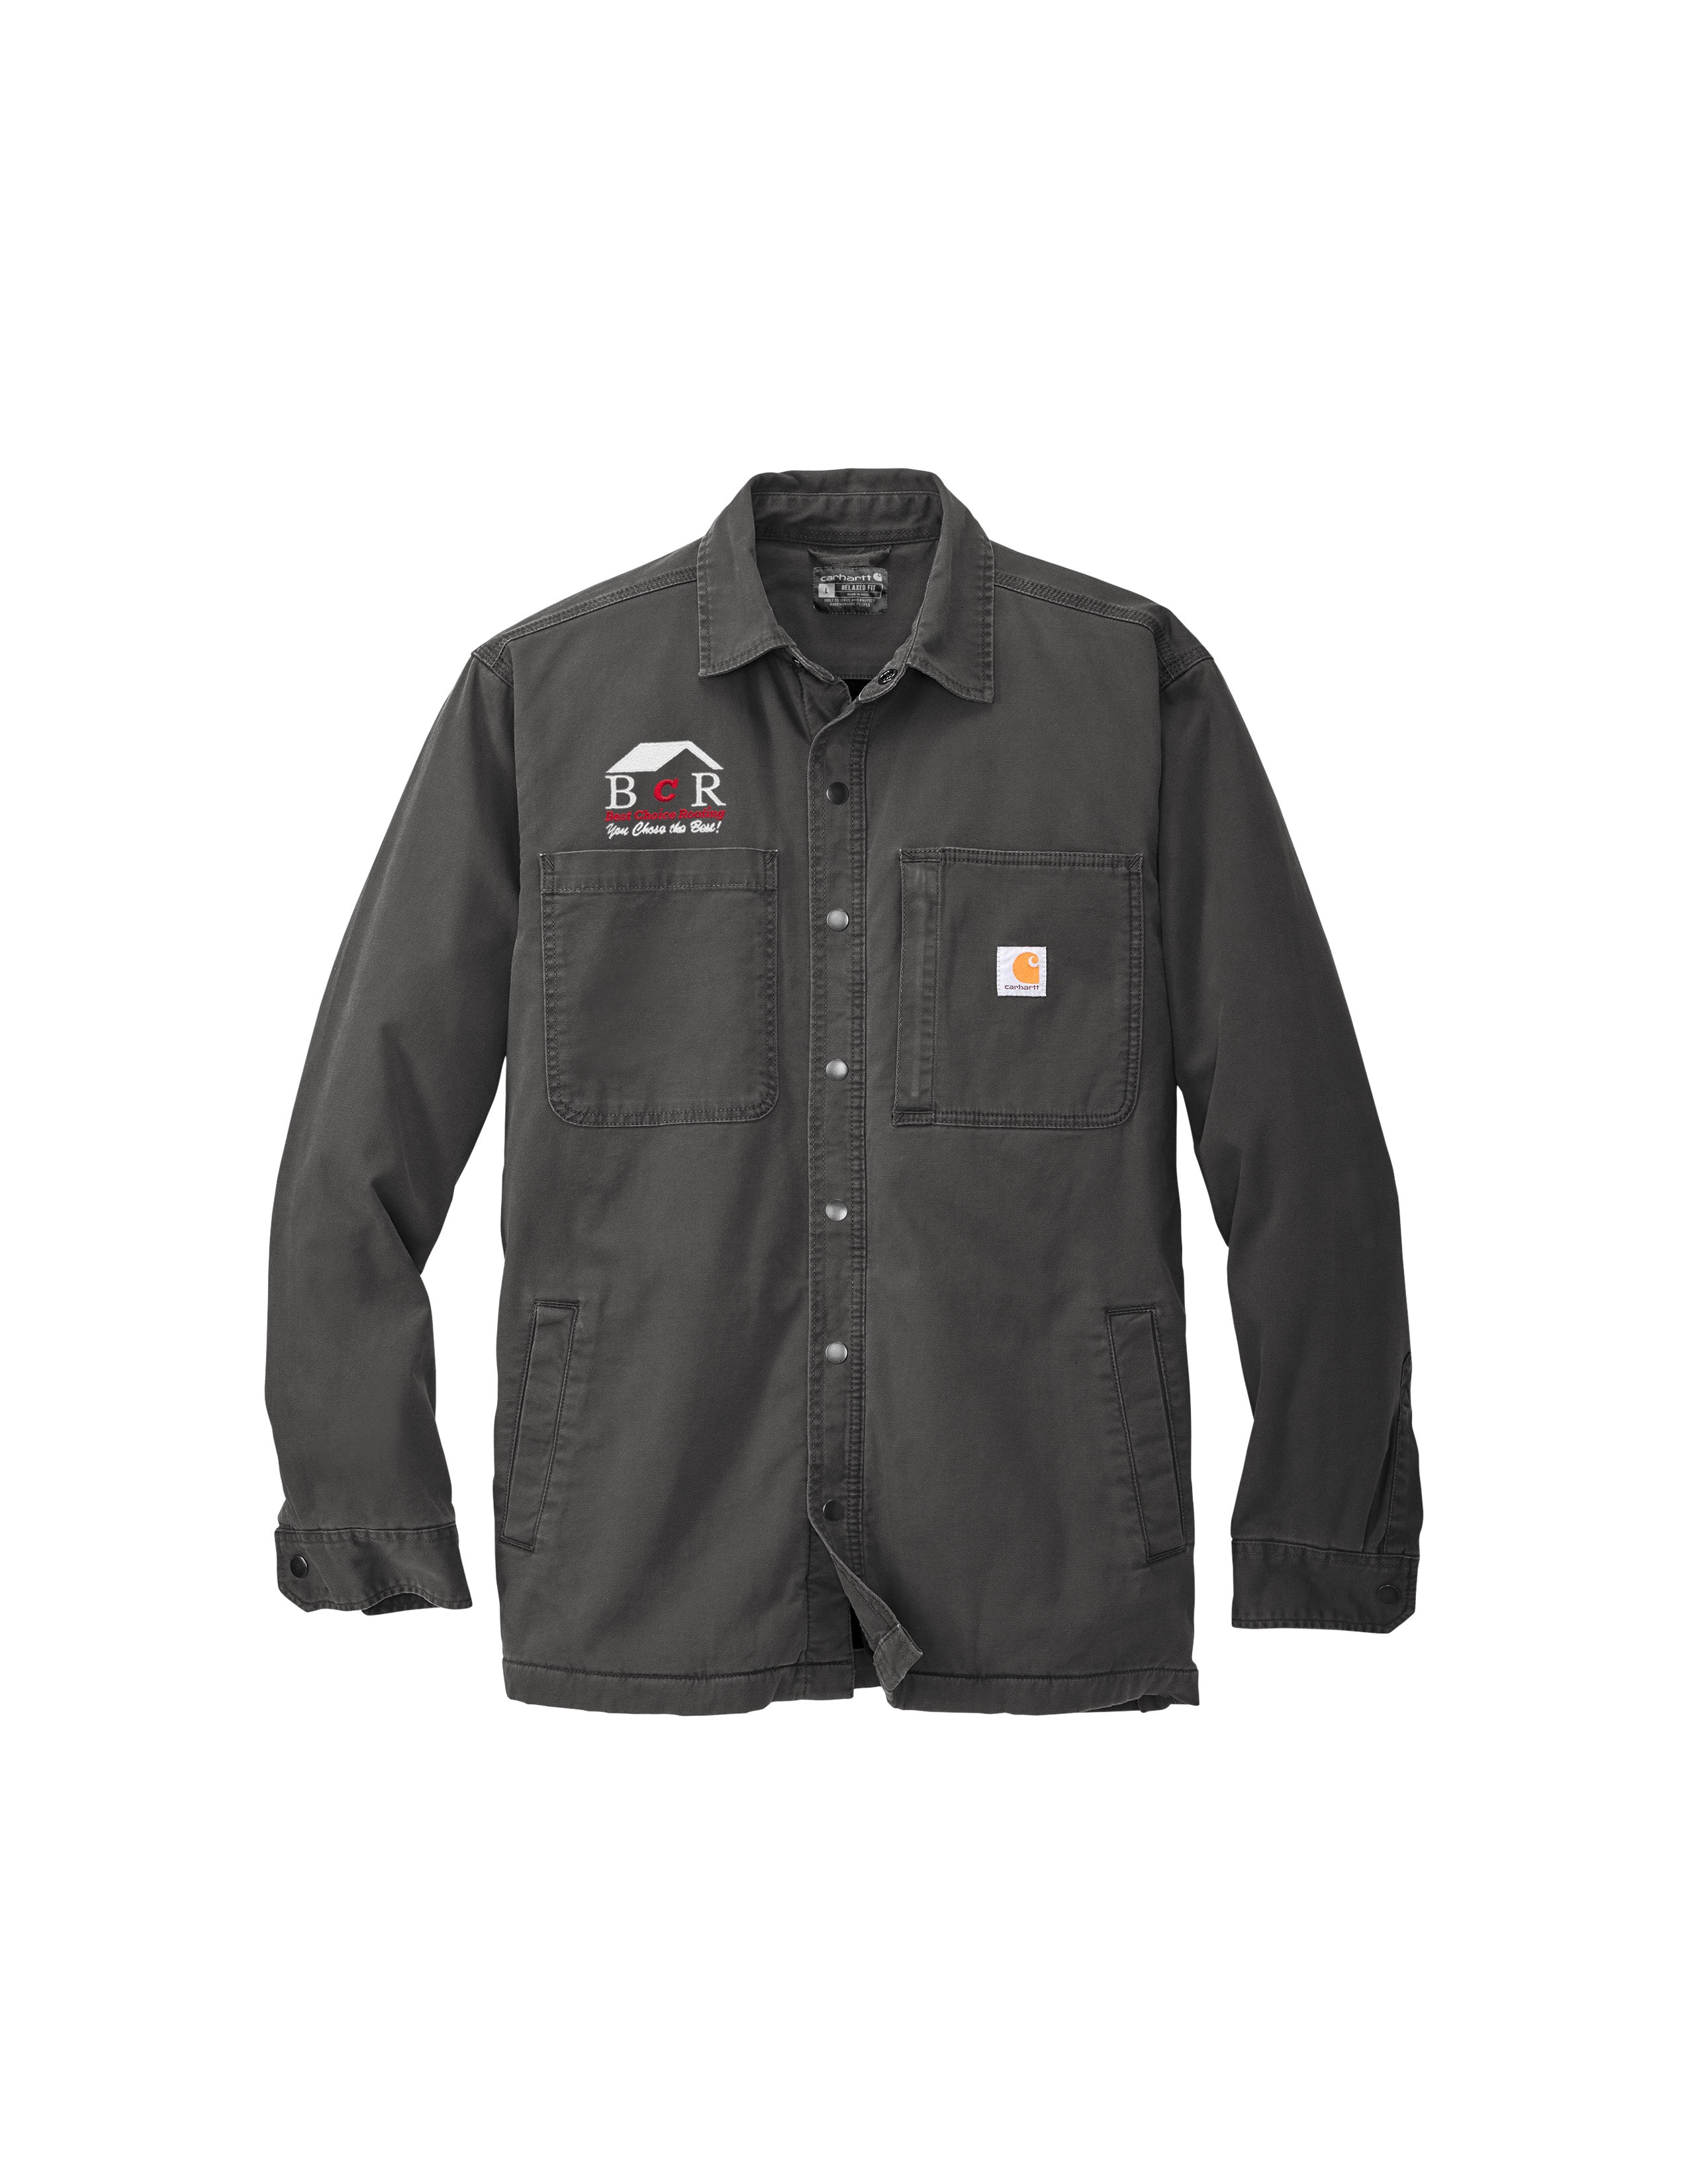 BCR Grey Carhartt Fleece Lined Jacket – Best Choice Roofing Merchandise